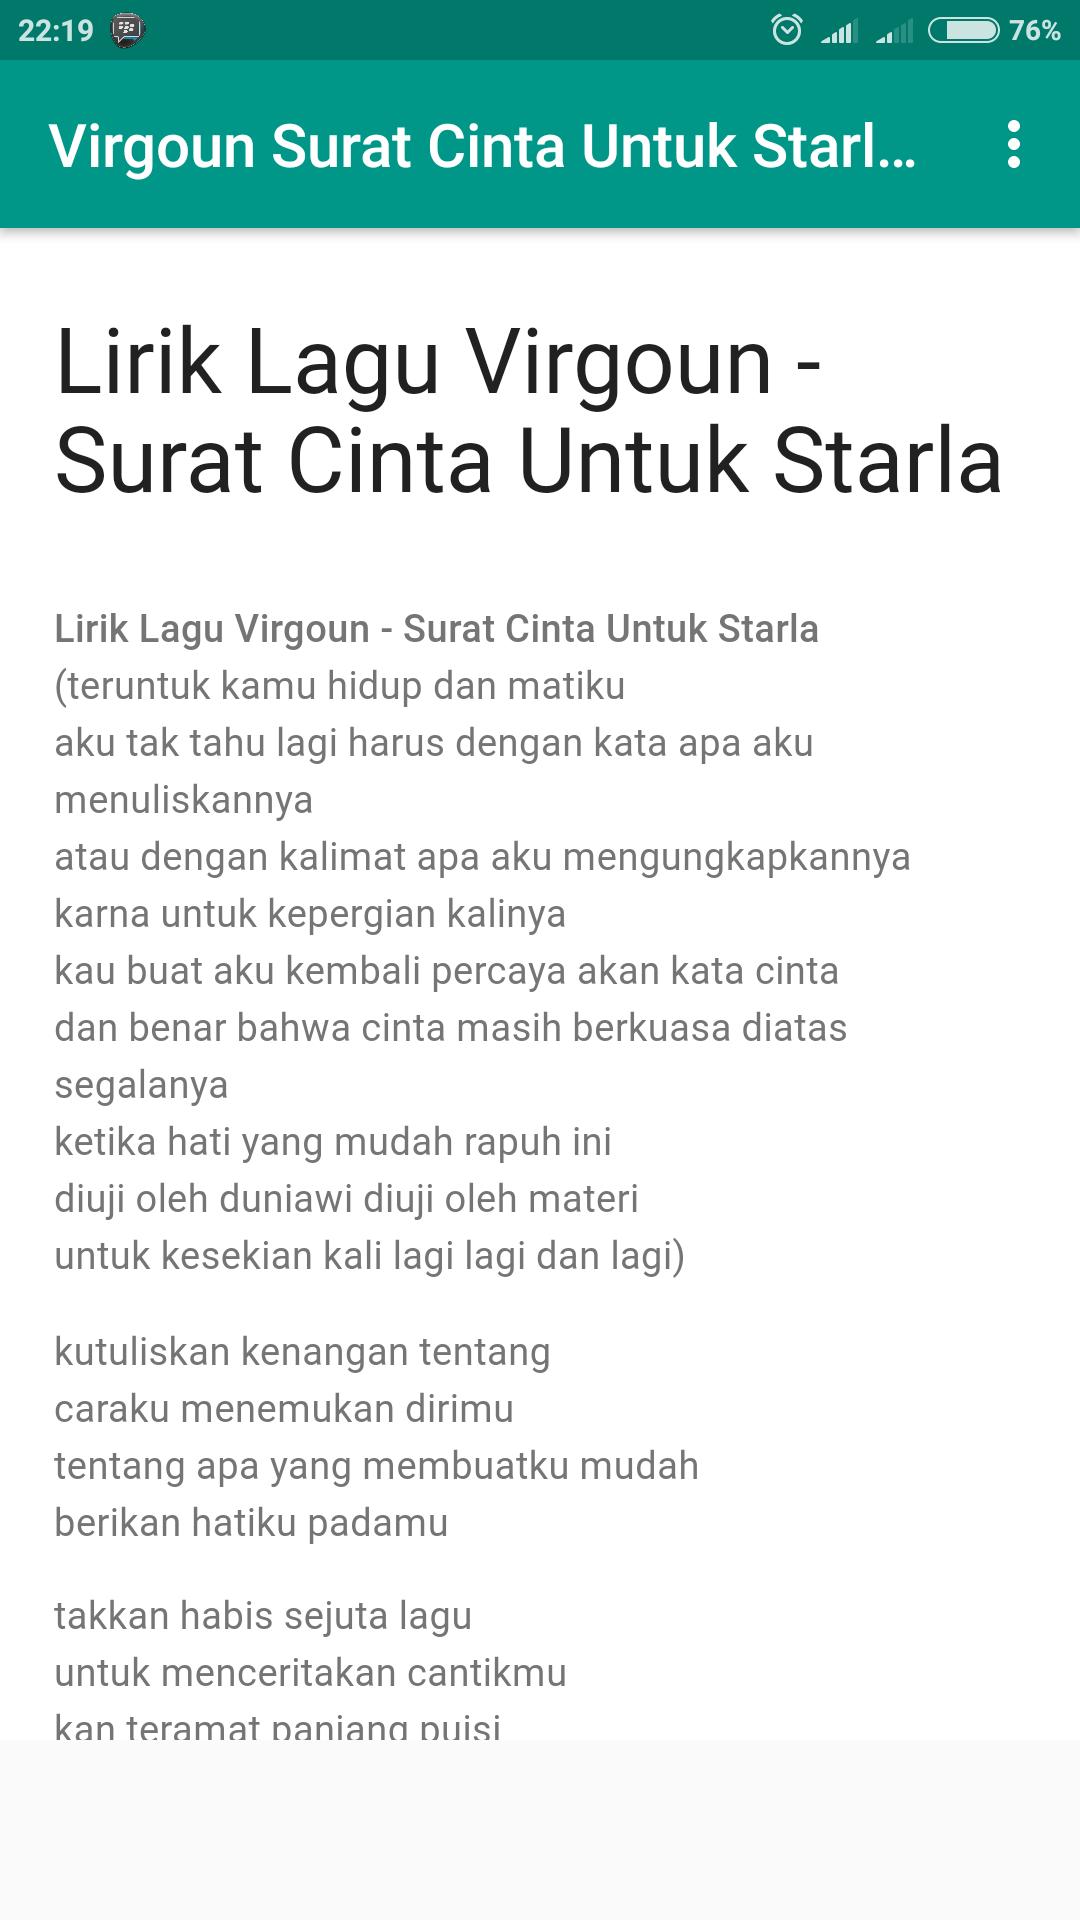 Lirik Lagu Virgoun Surat Cinta Untuk Starla For Android Apk